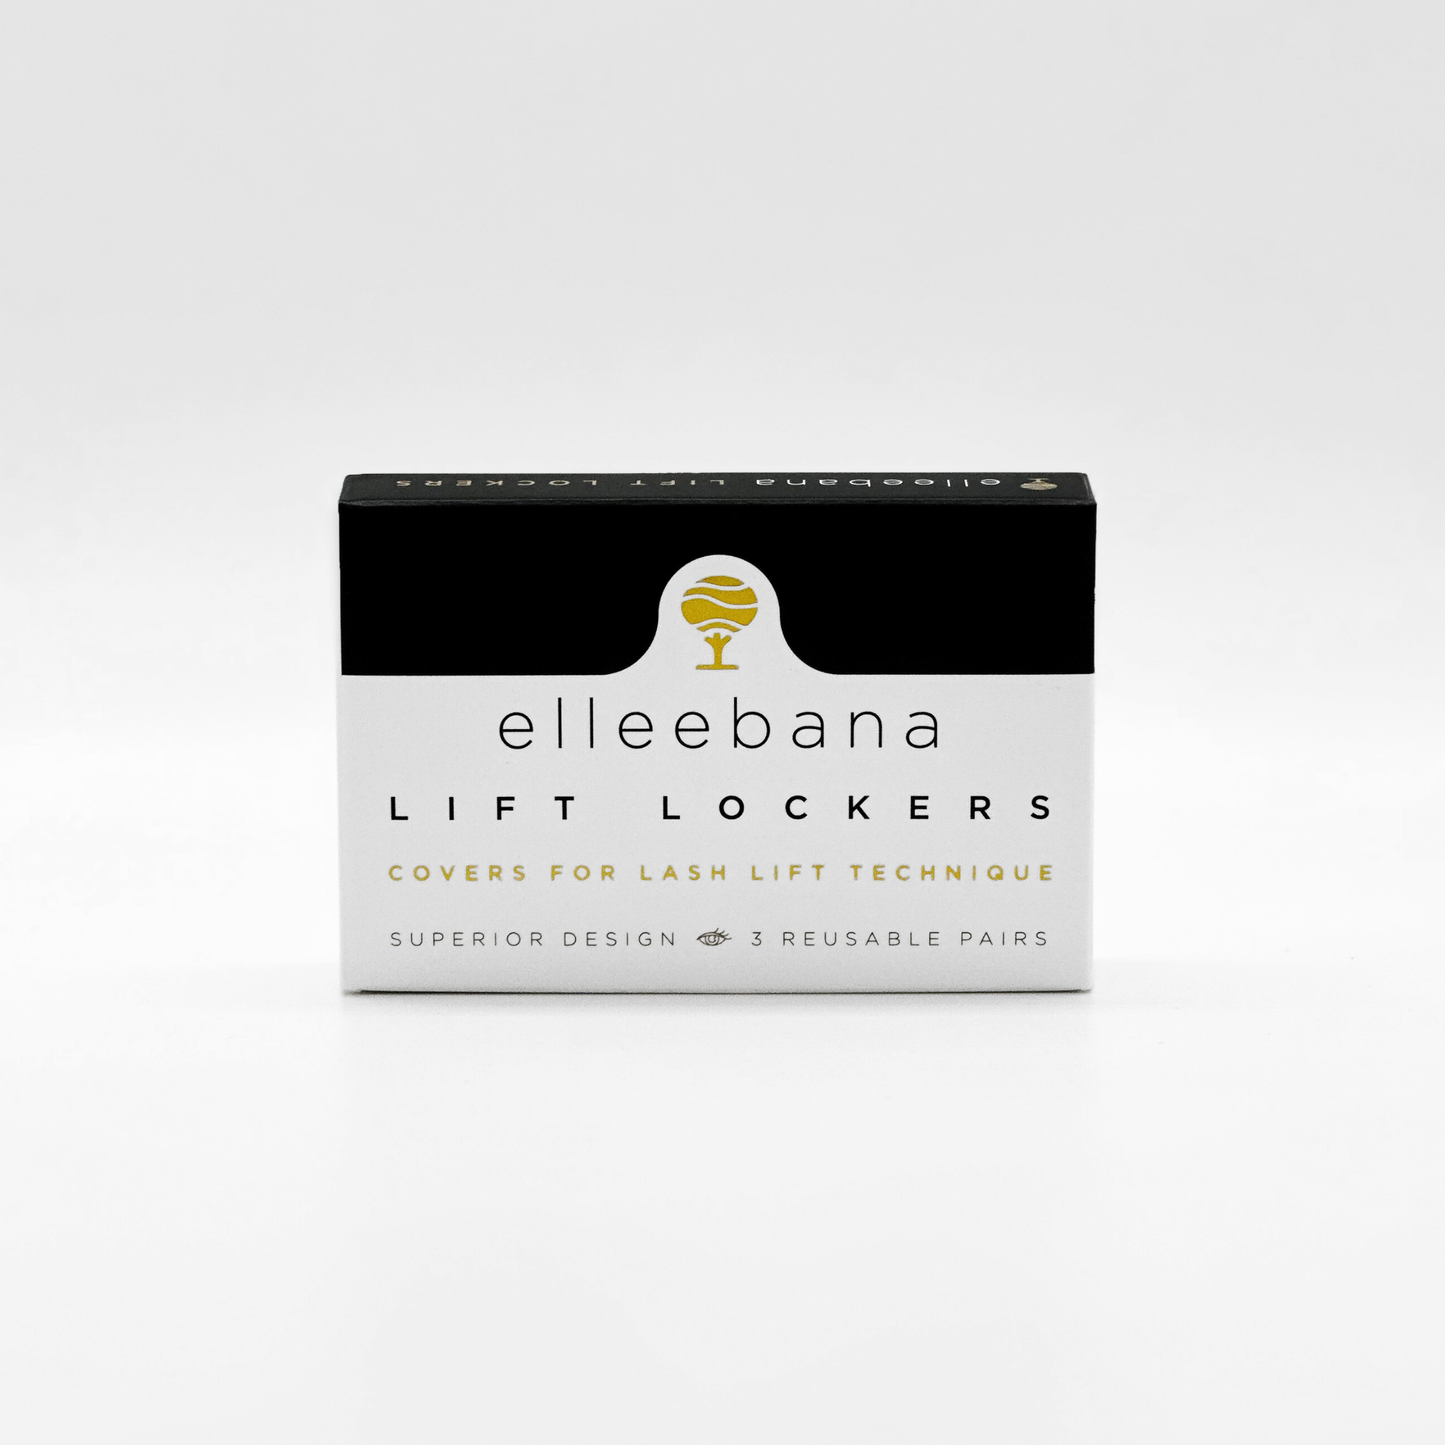 ELLEEBANA LIFT LOCKERS- NEW PRODUCT!